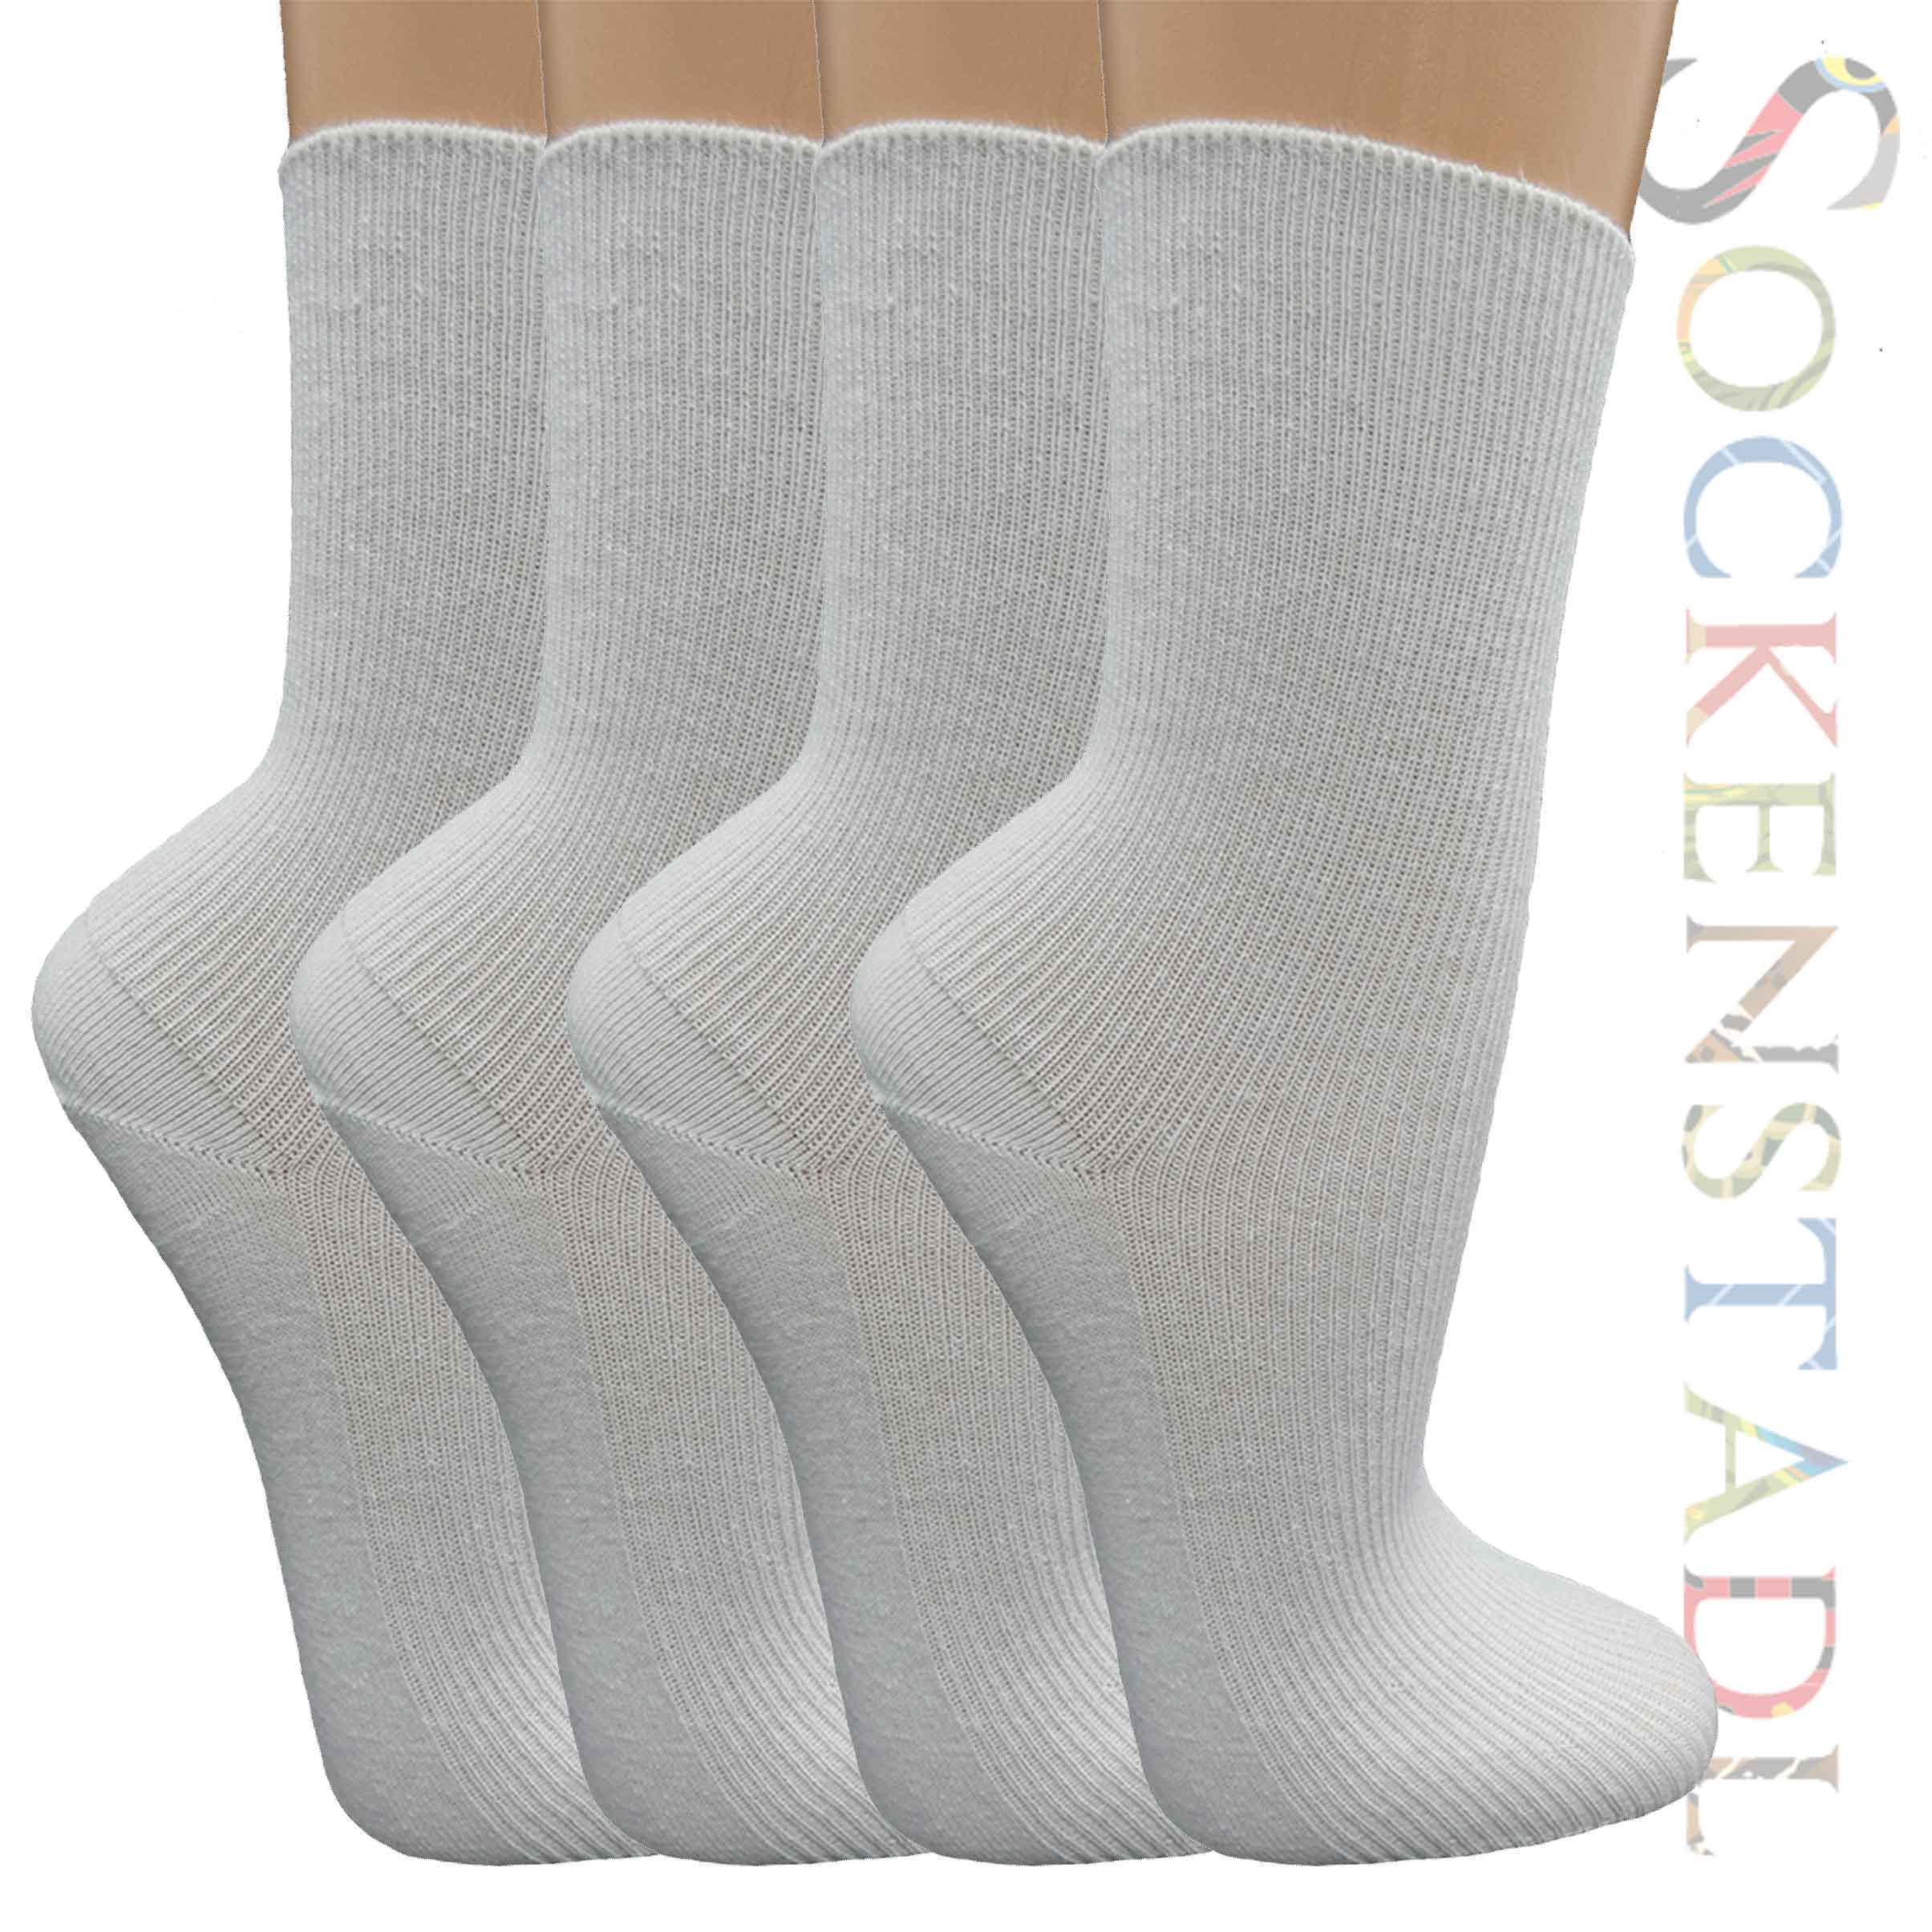 4 Paar Socken 100% Baumwolle ohne Gummi Diabetikersocken 1/1 Rippe weiß 47-50 